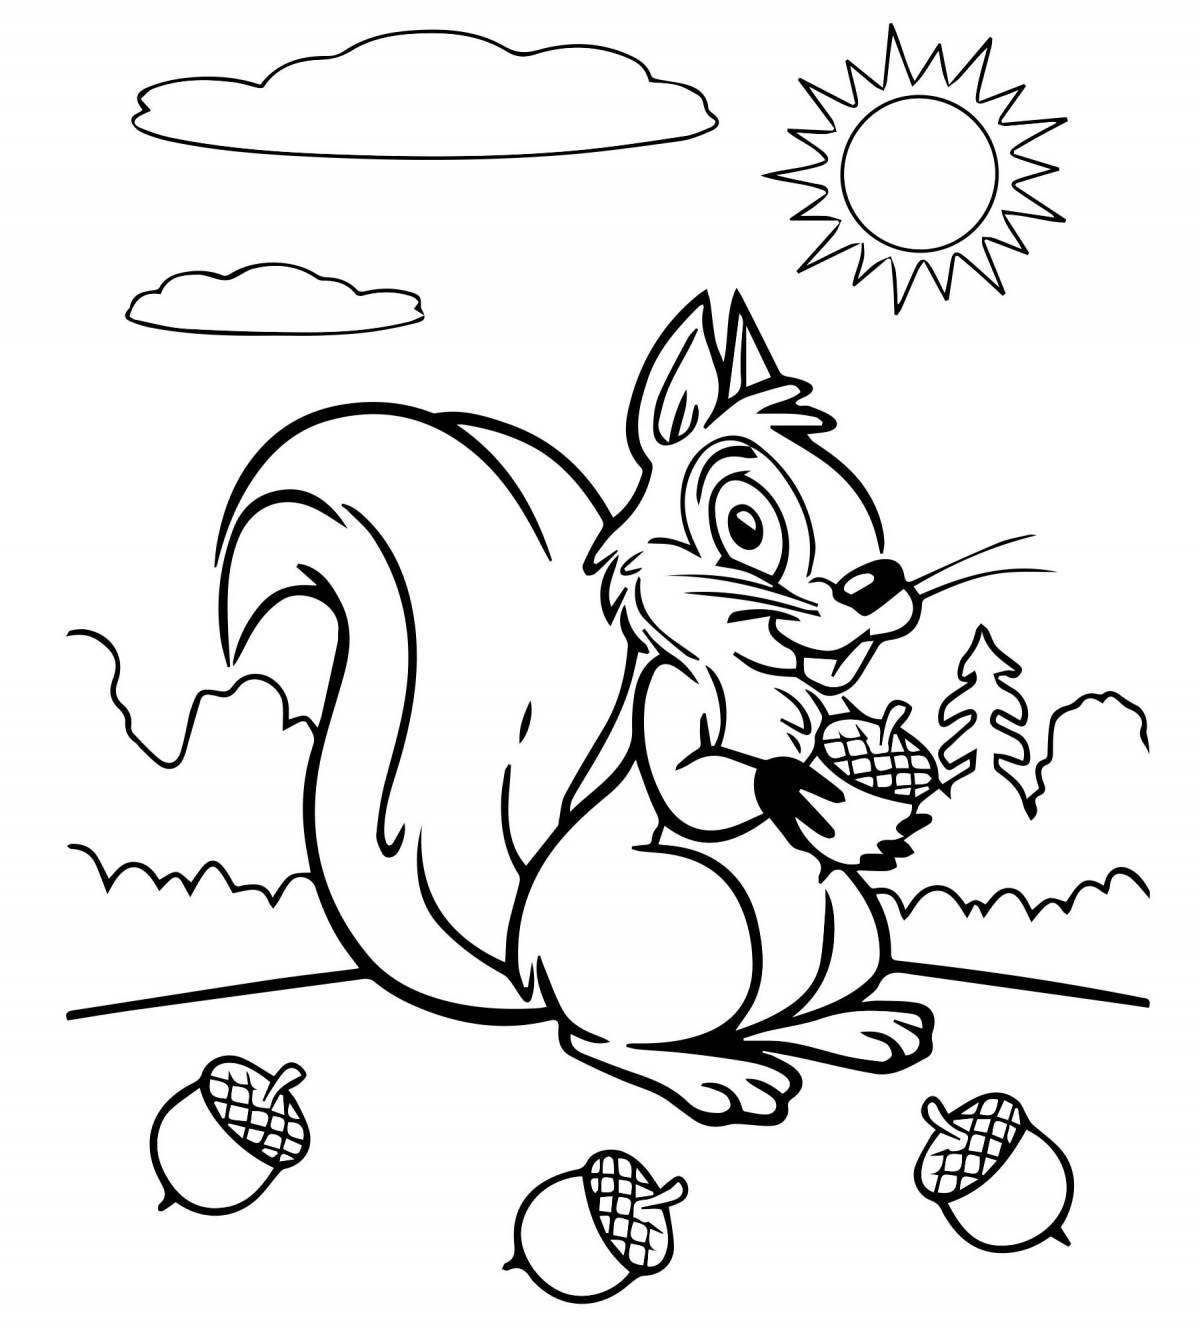 Bubble squirrel coloring page